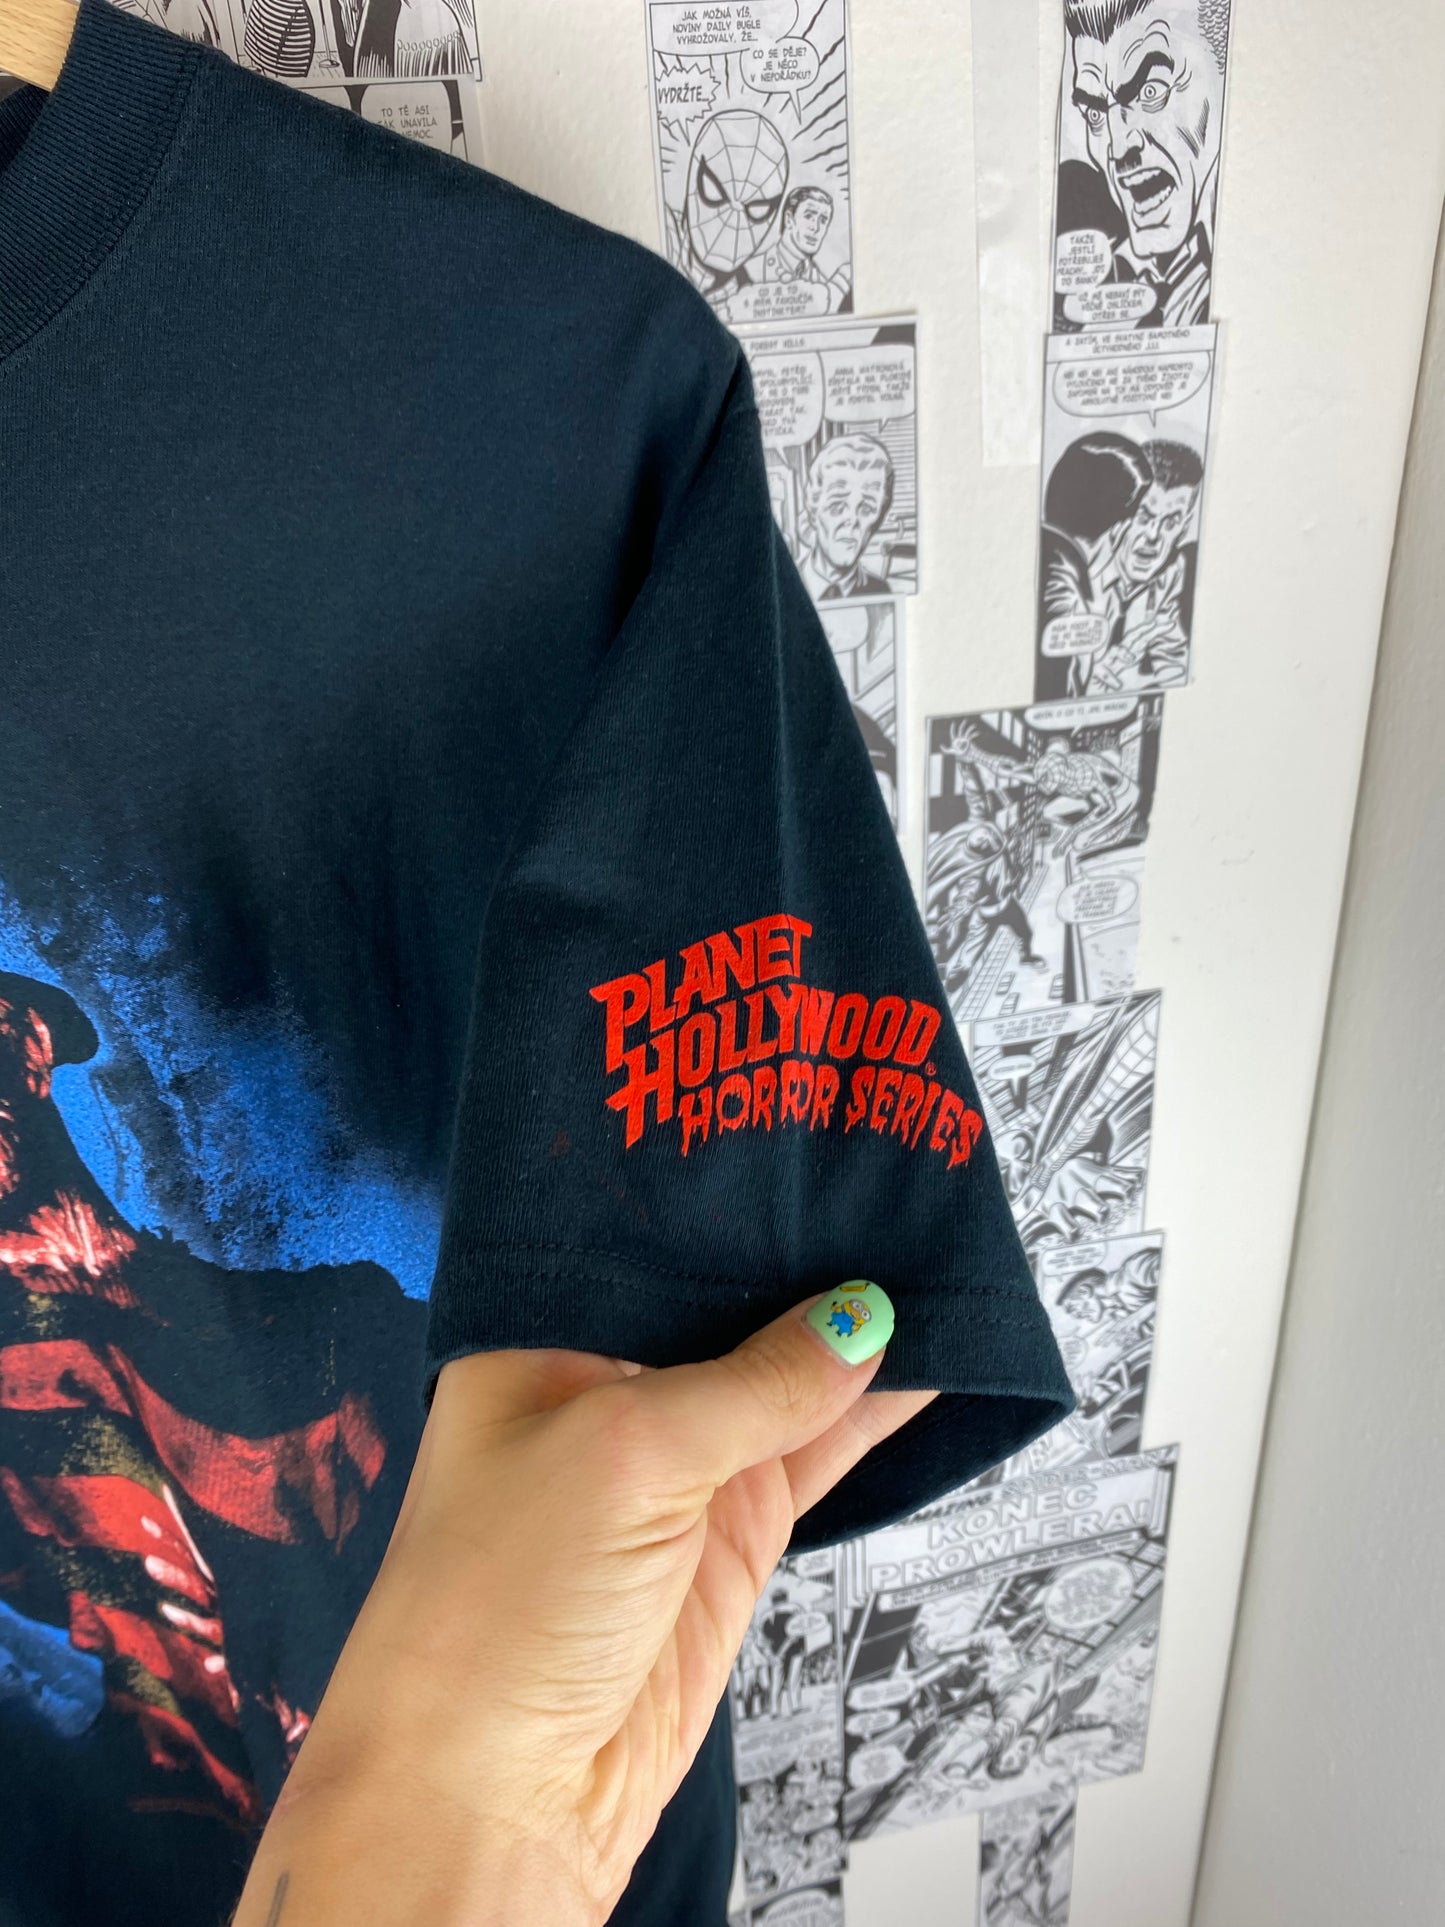 Vintage Freddy Krueger - Planet Hollywood Horror Series t-shirt - size M